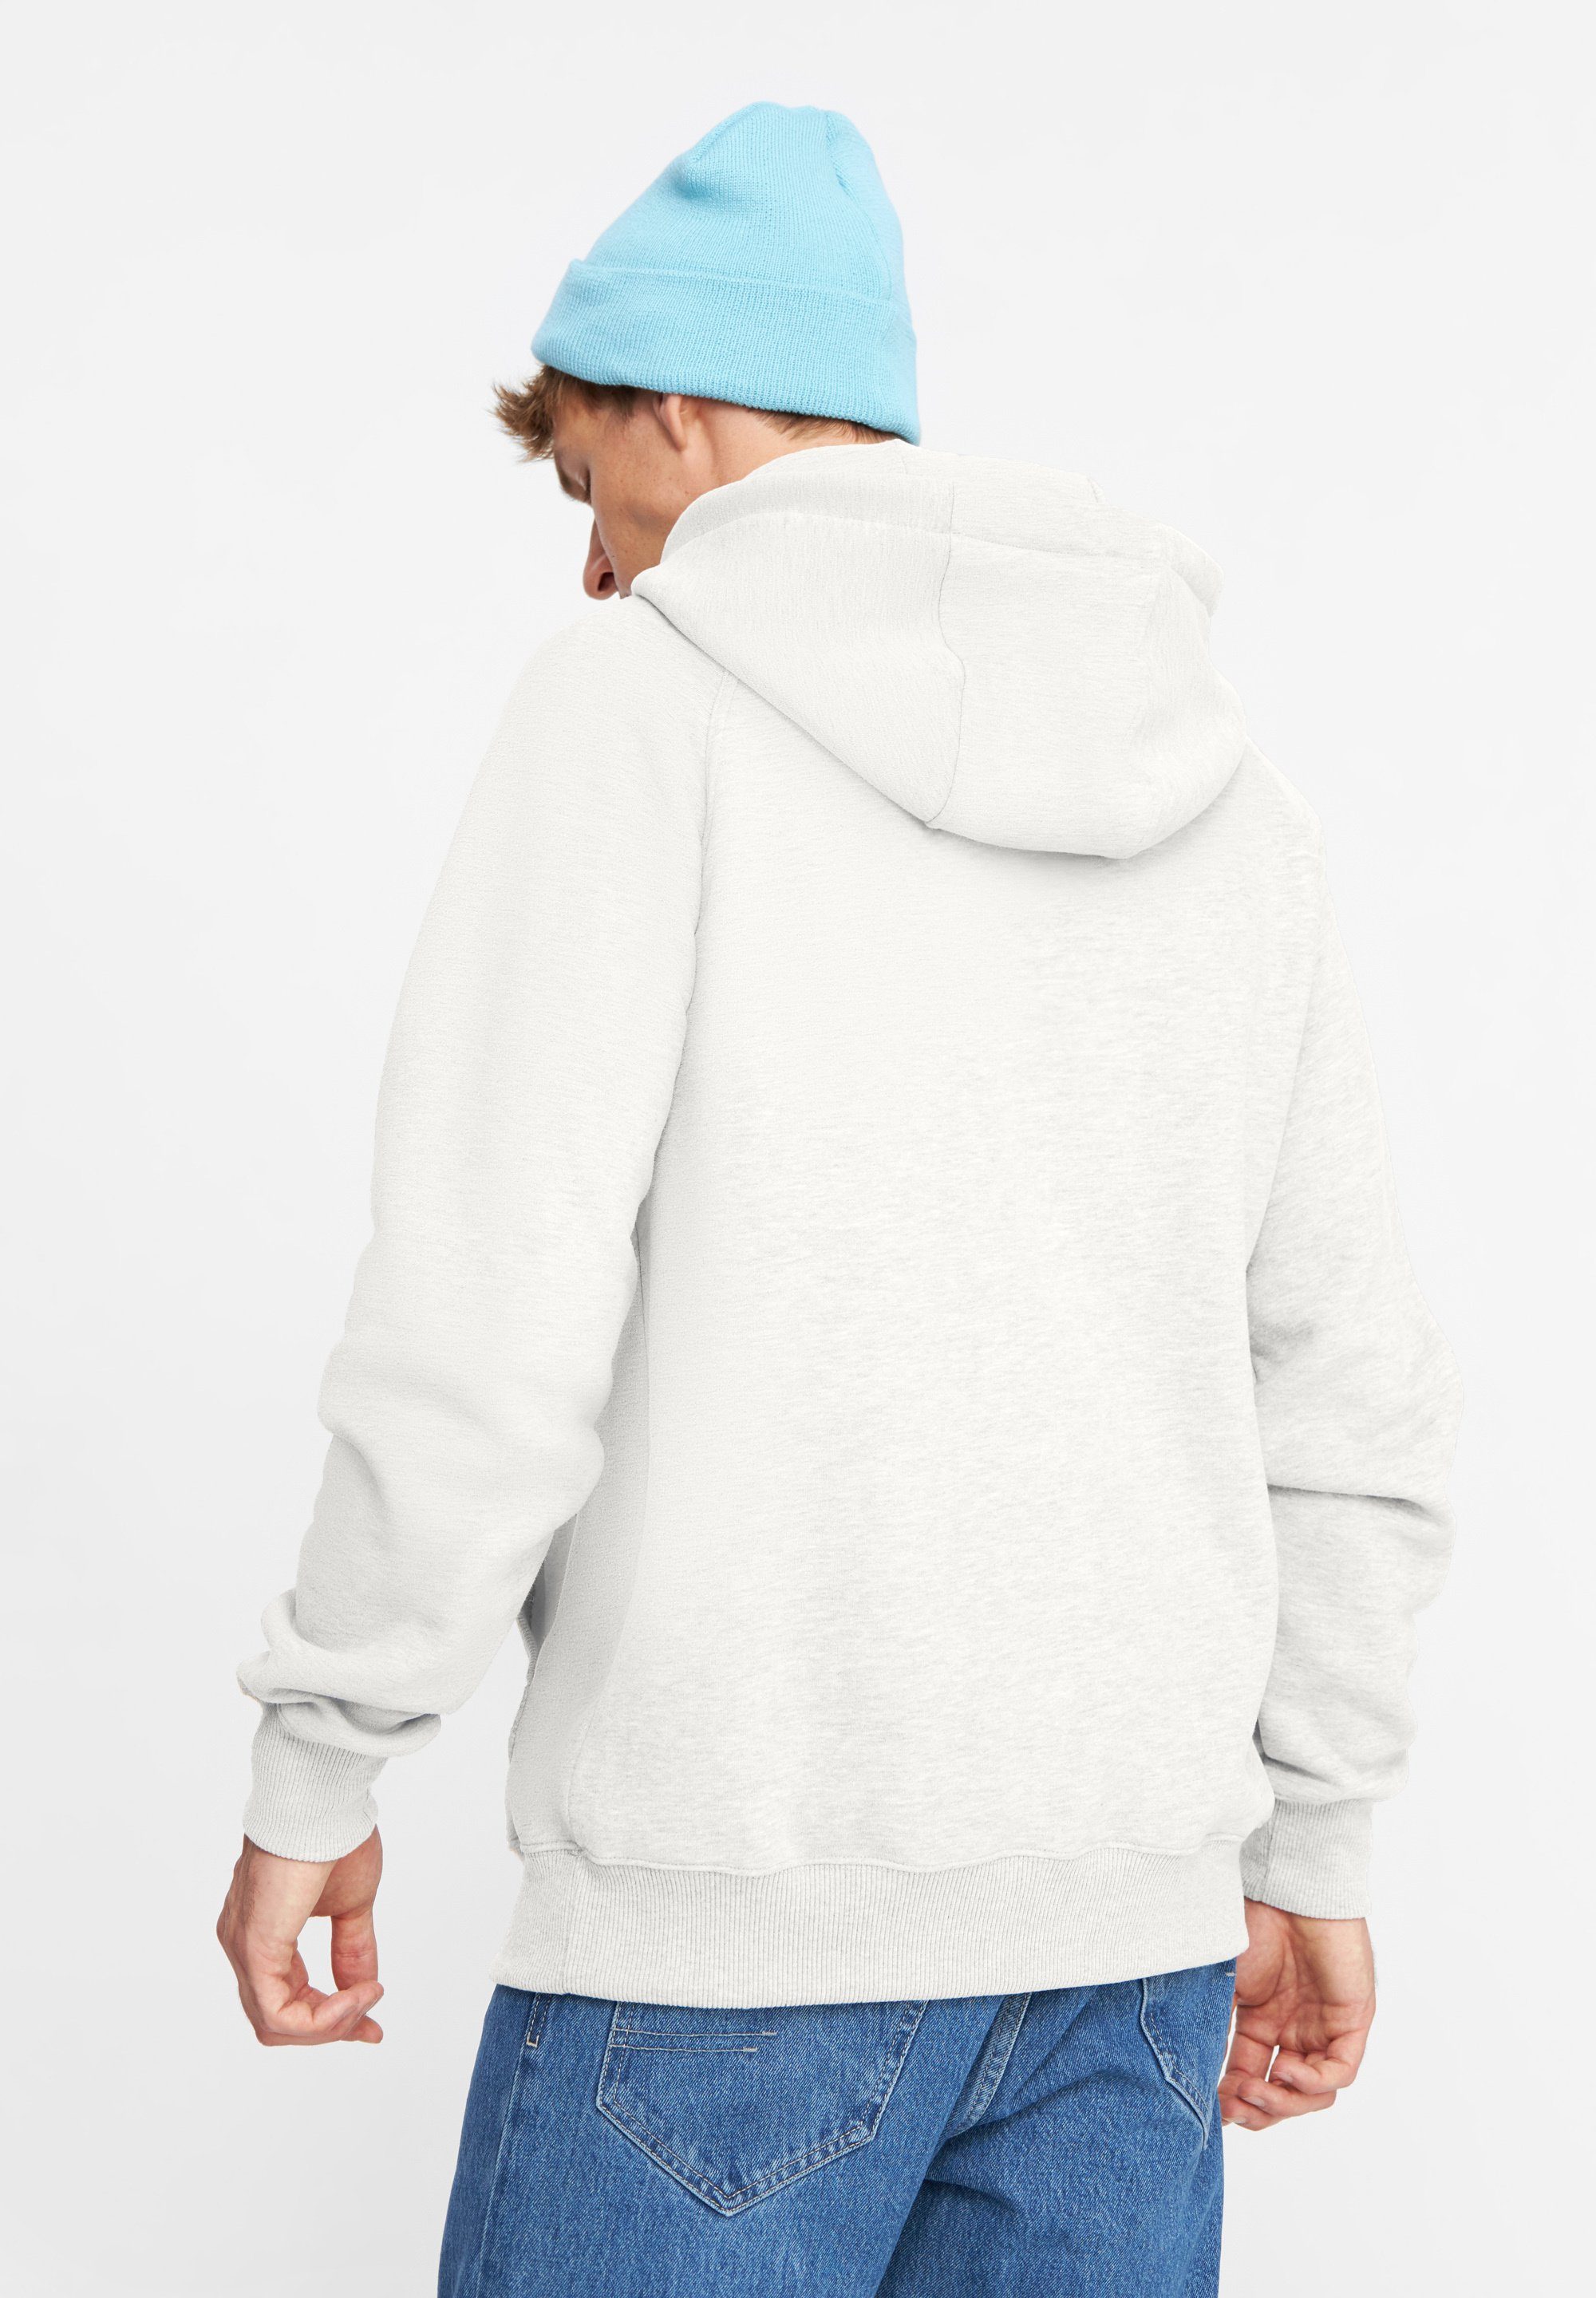 Sweatshirt superweiches Sturmmöwe off-white Derbe Material Portugal, Made in